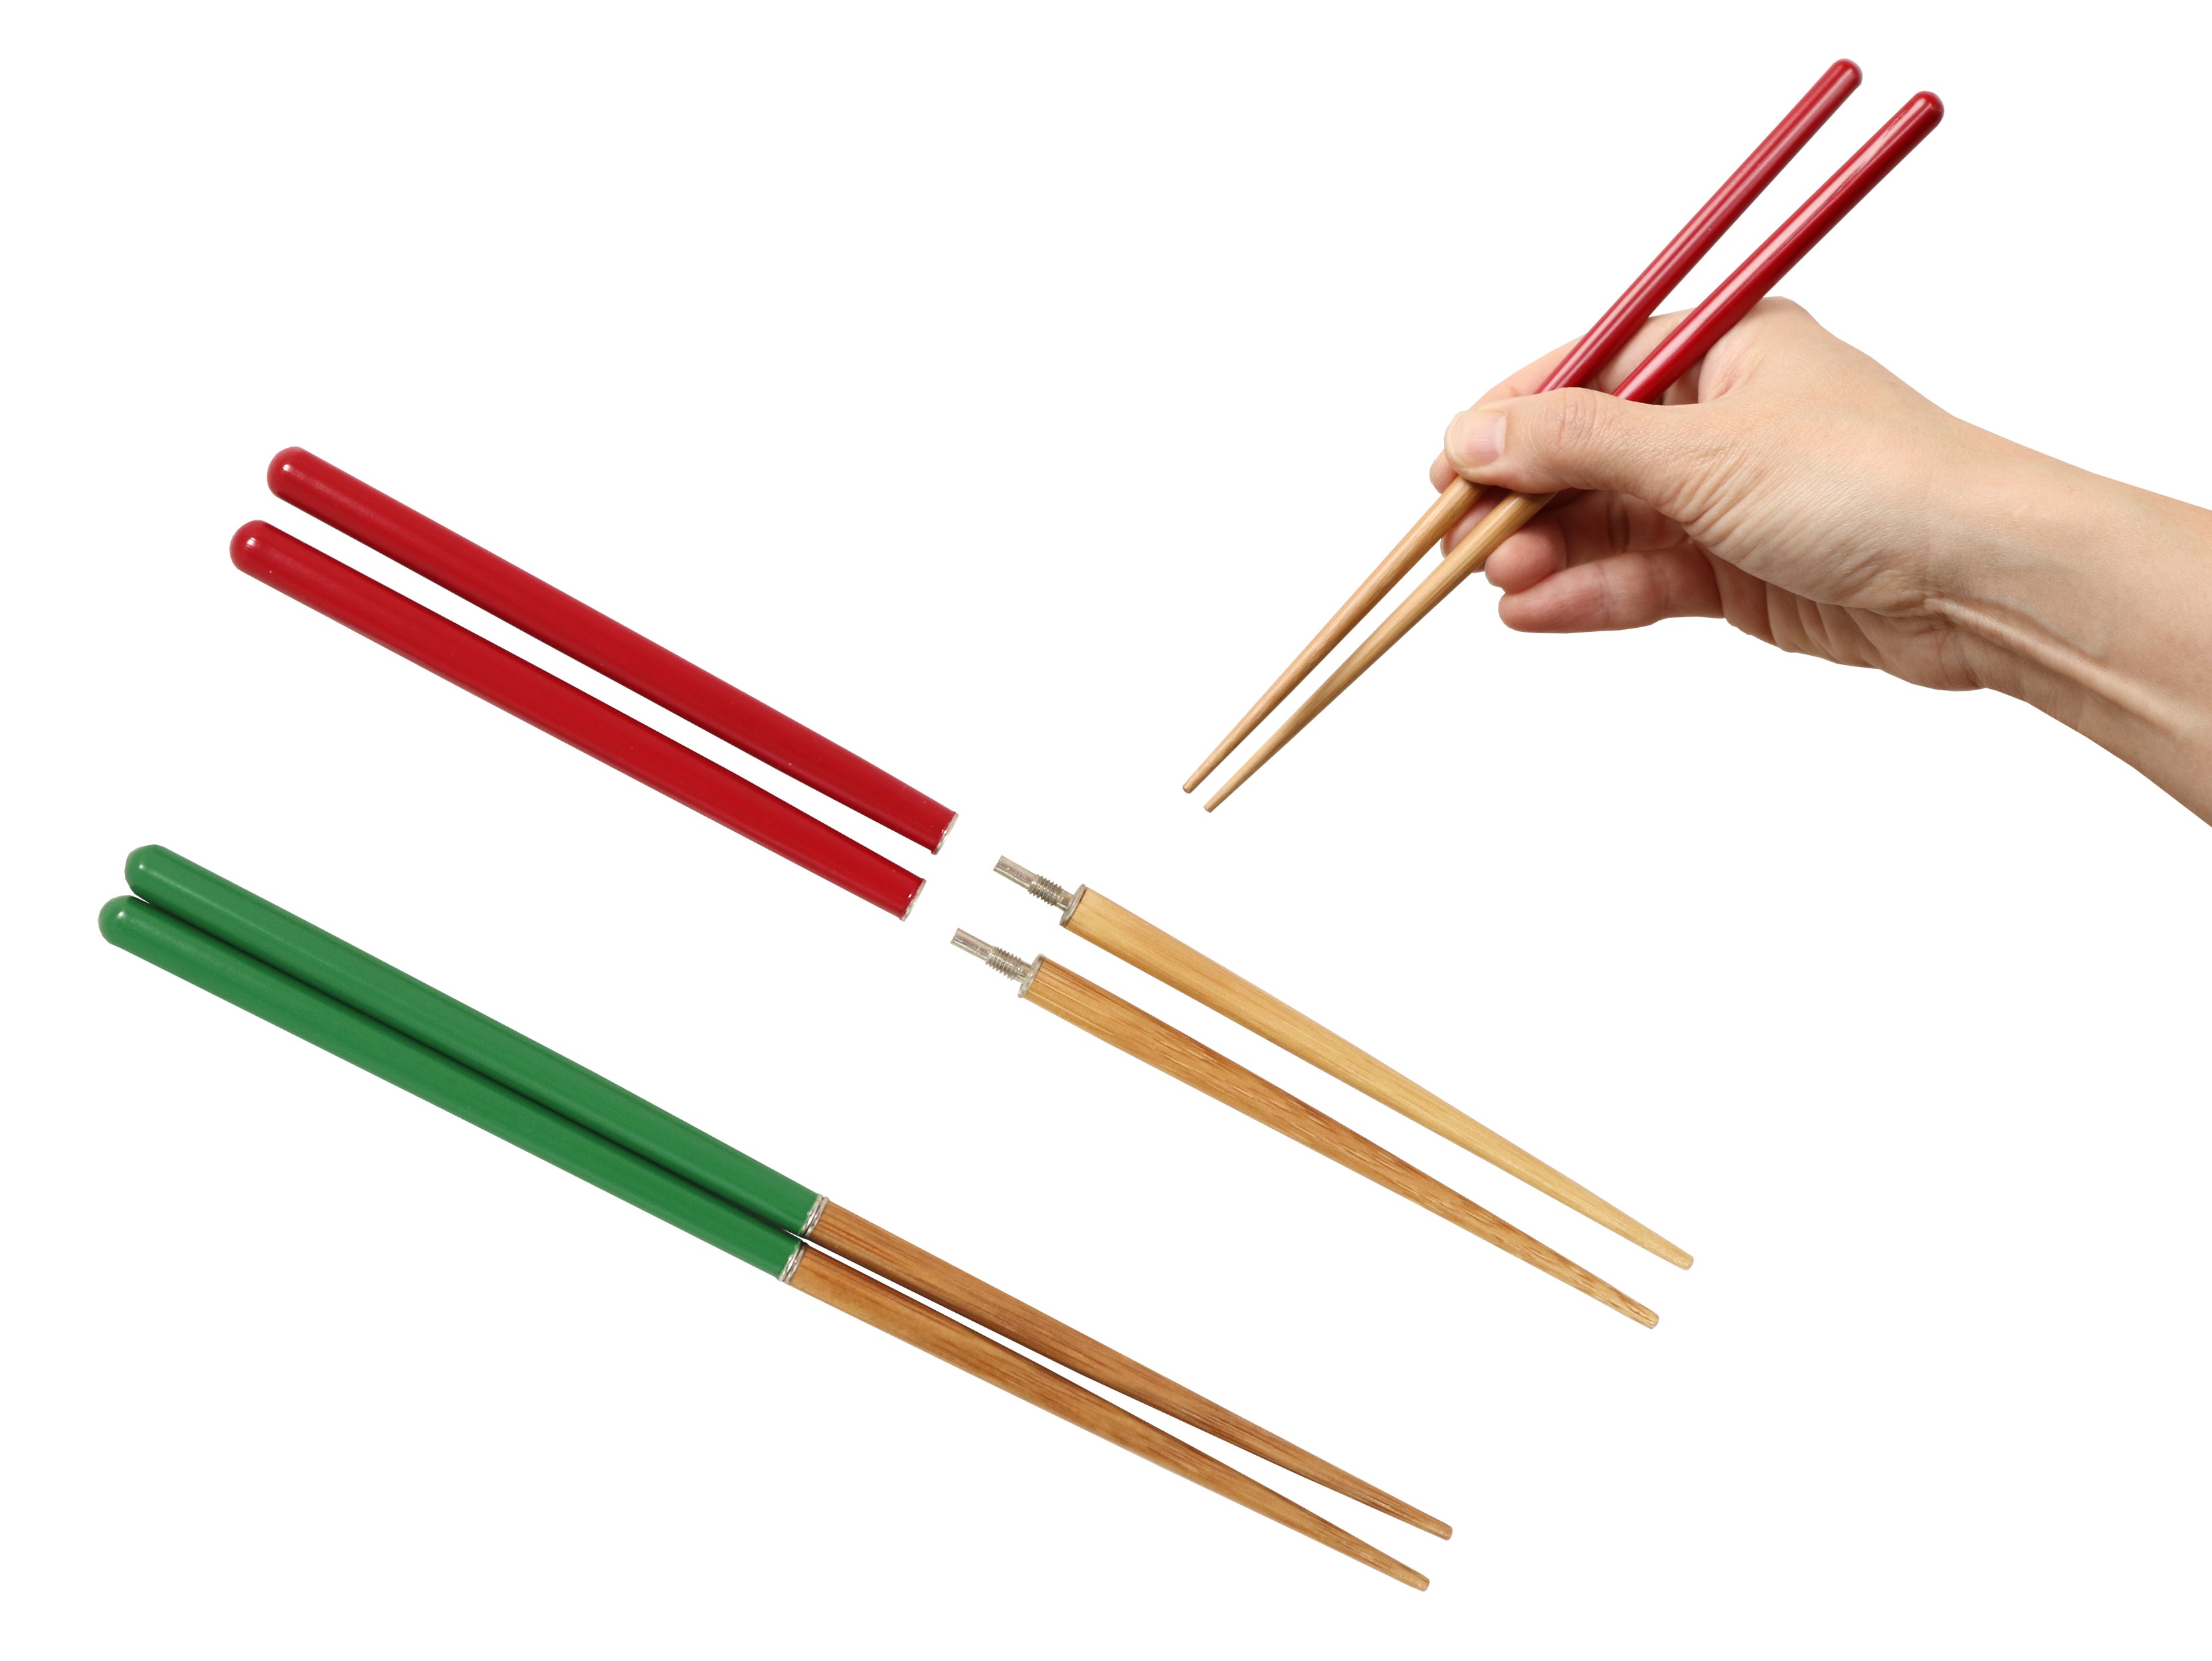 Buy Foldable Chopsticks online